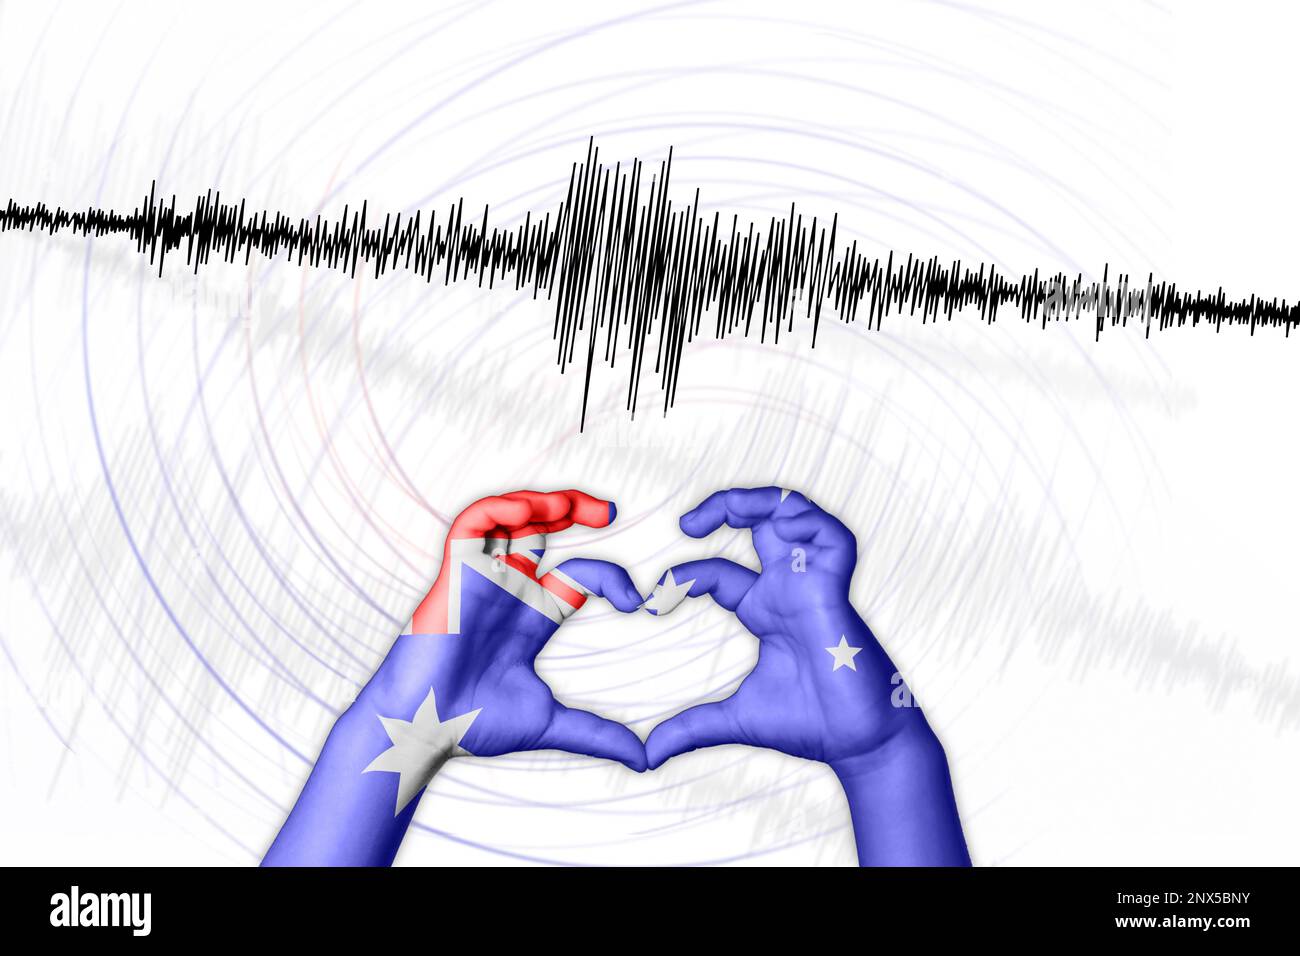 Erdbeben in Australien Symbol der Heart Richter Scale Stockfoto